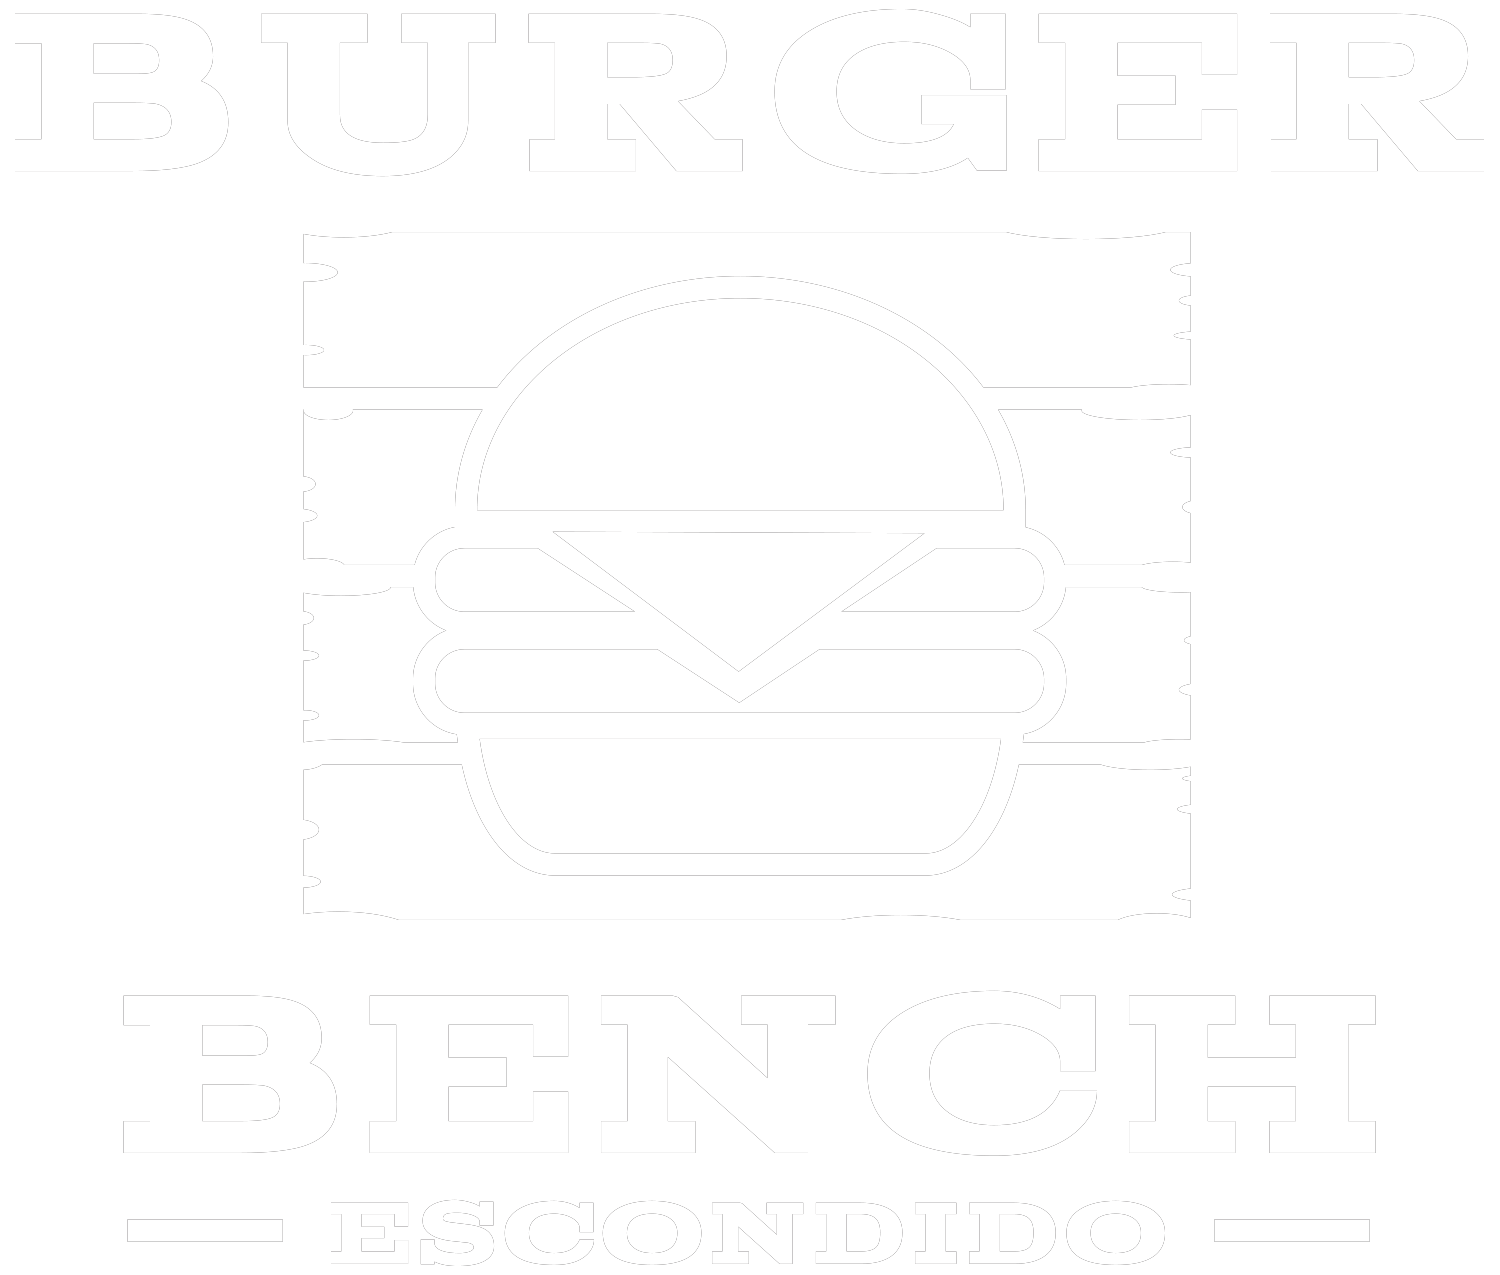 All Burger Places Logo - Burger Bench